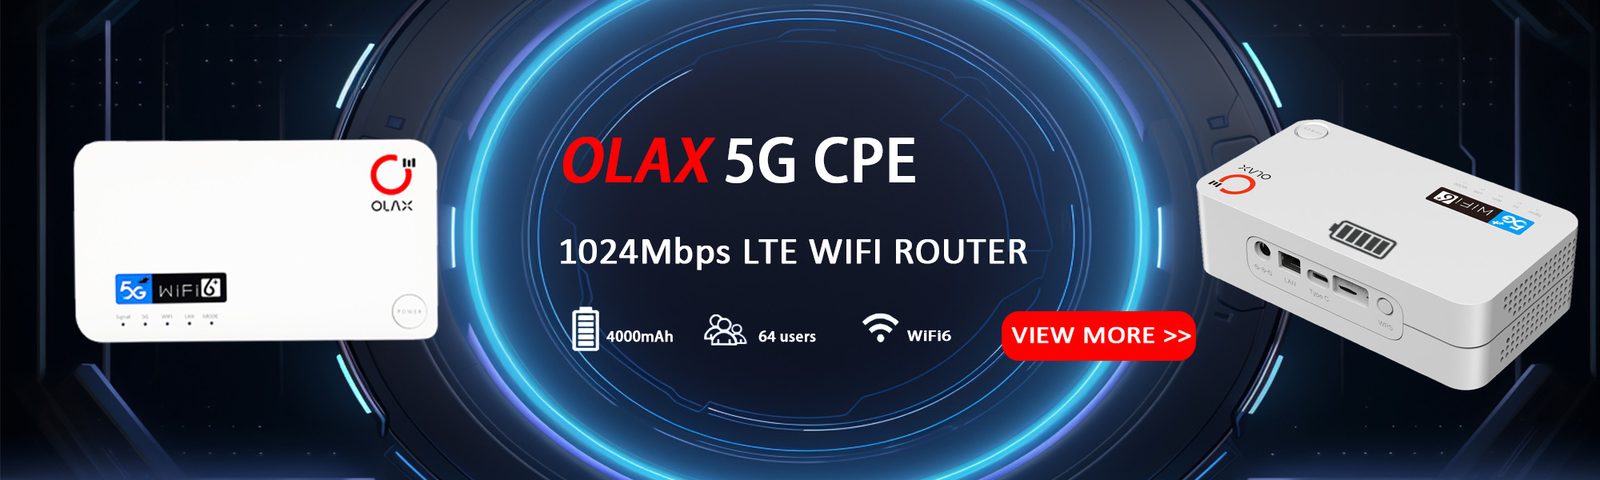 OLAX G5010 Qualcomm 4g 5g lte hotspot wifi saku 4000mah baterai router CPE Cat22 modem